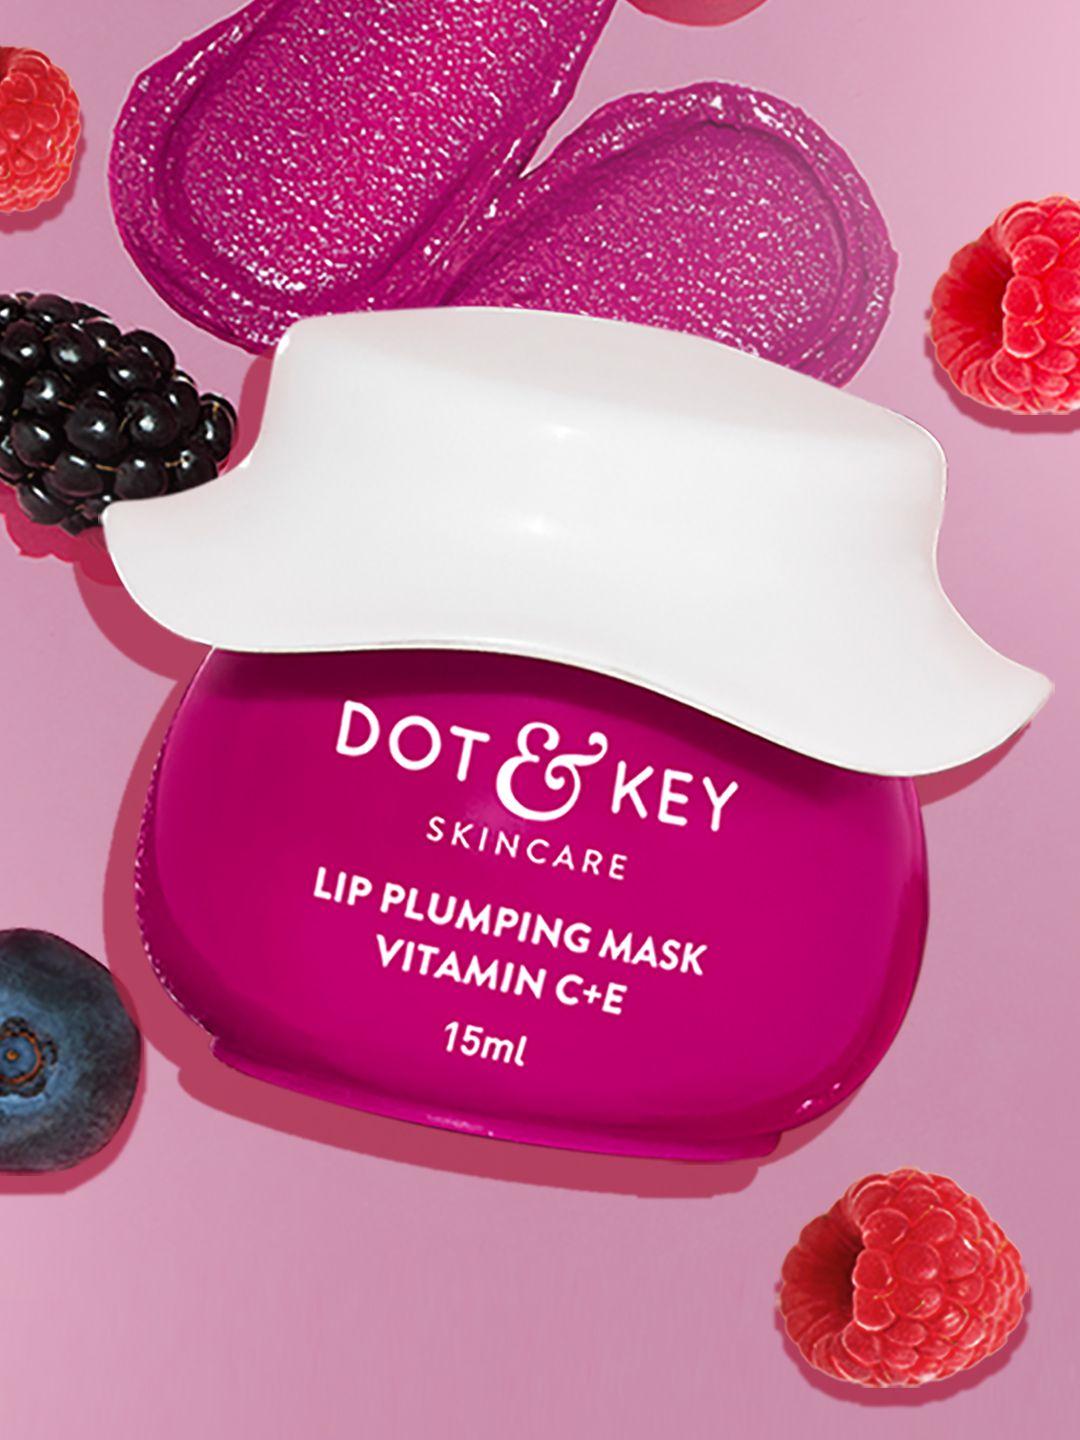 dot & key vitamin c+e lip berry bomb plumping mask-wild berries for flaky lips - 15ml